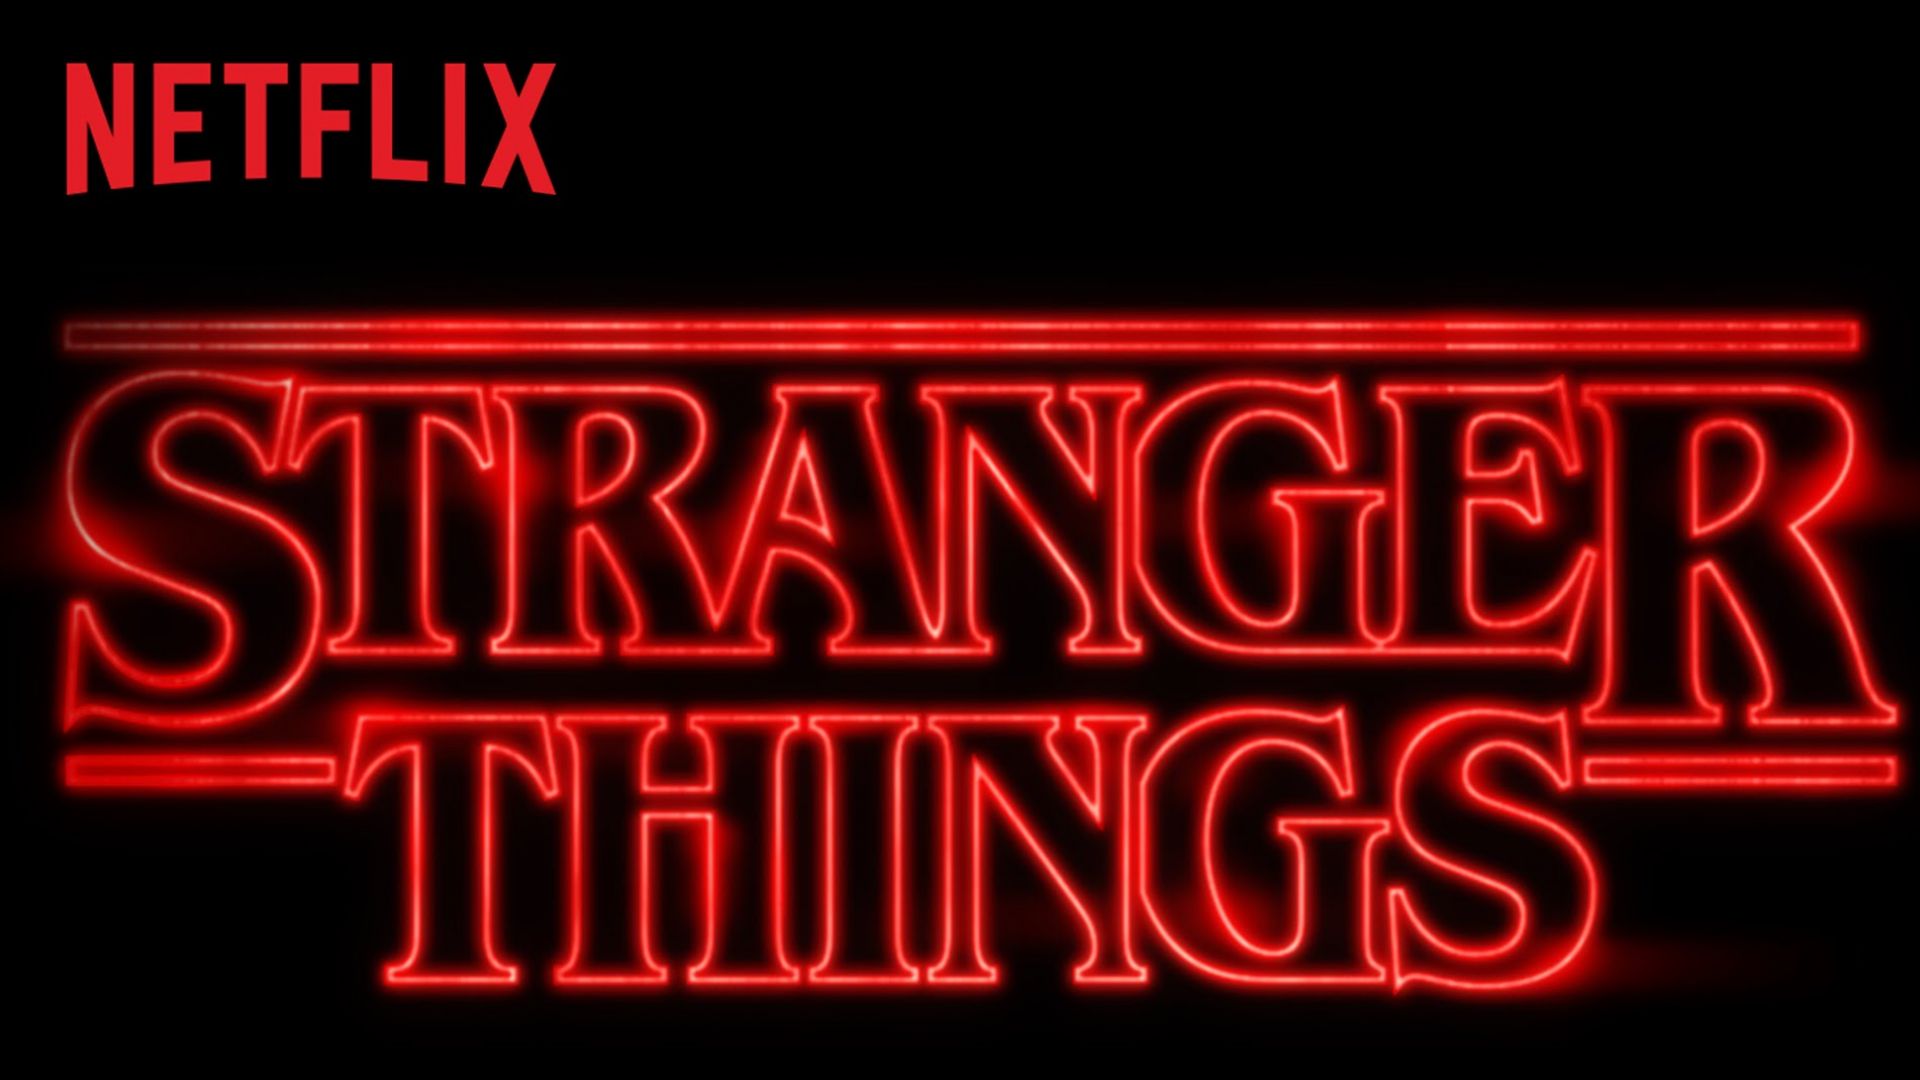 Netflix teases Stranger Things season 2 (coming in 2017)